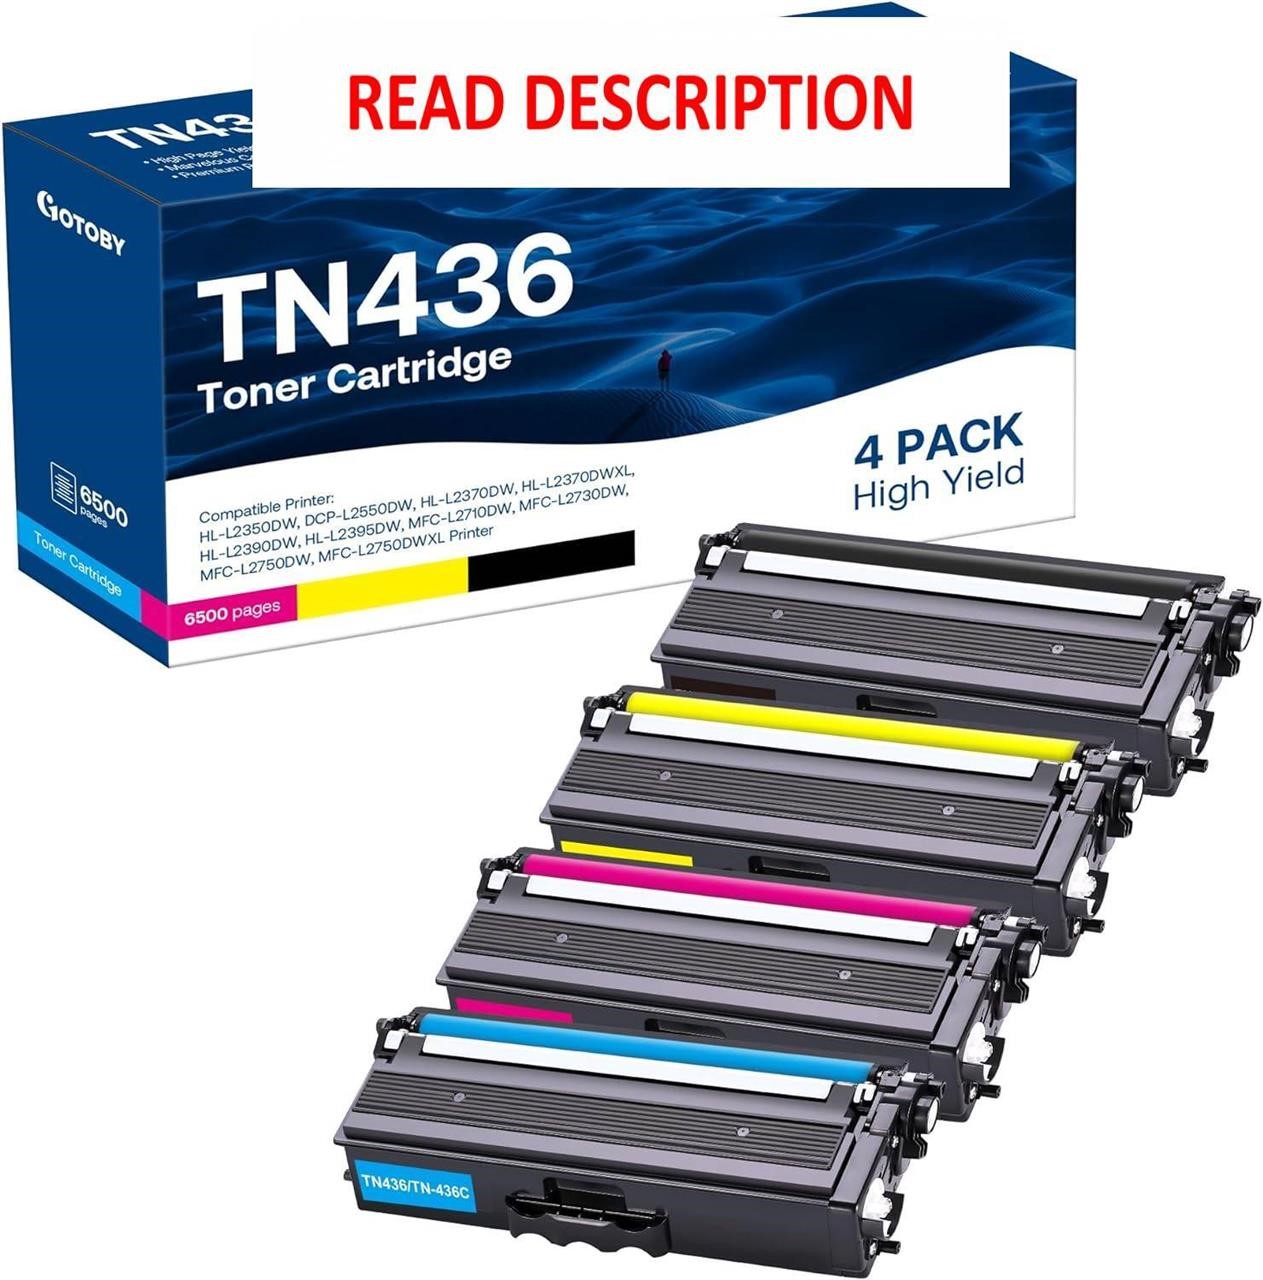 $65  TN436 Toner for Brother Printer  4 Pack